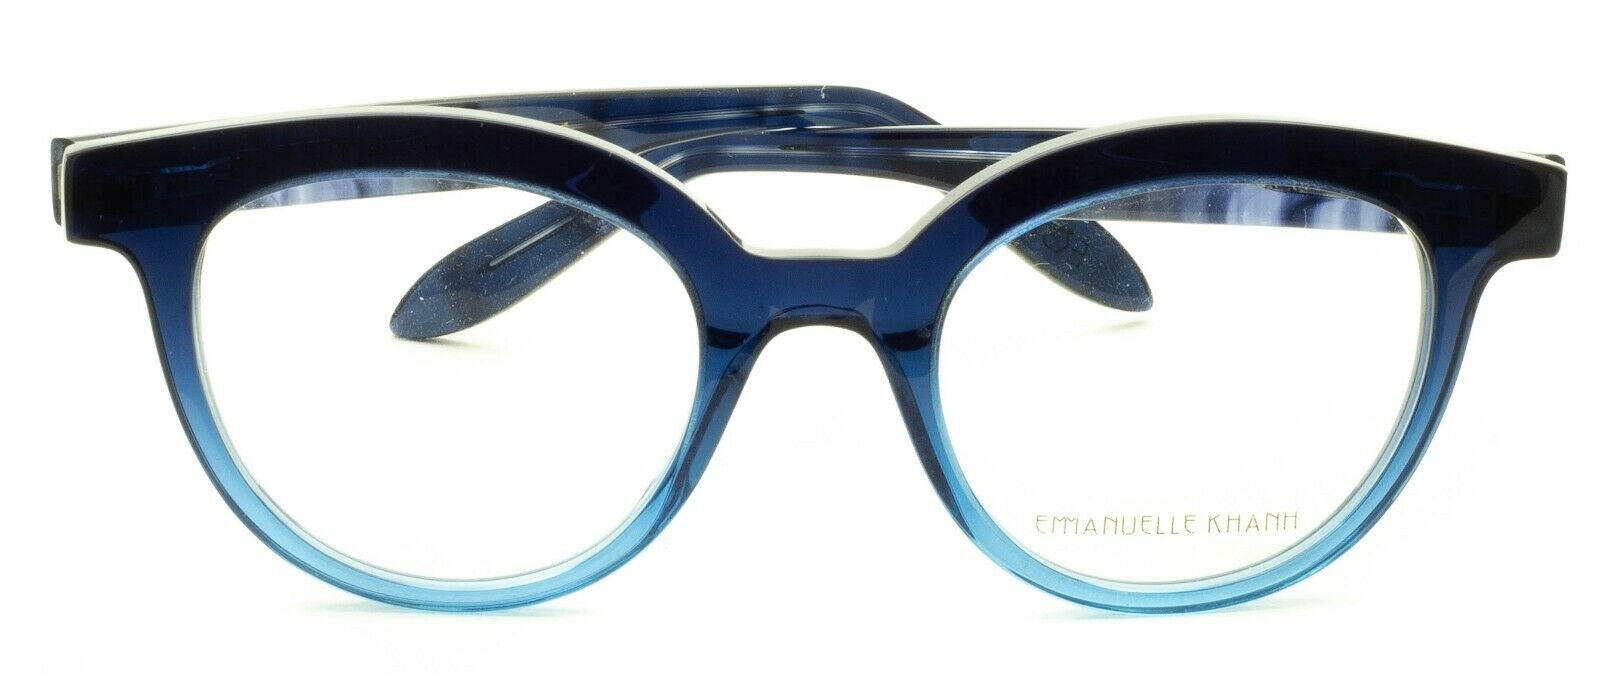 EMMANUELLE KHANH 6067 116 45mm Eyewear FRAMES RX Optical Eyeglasses Glasses New